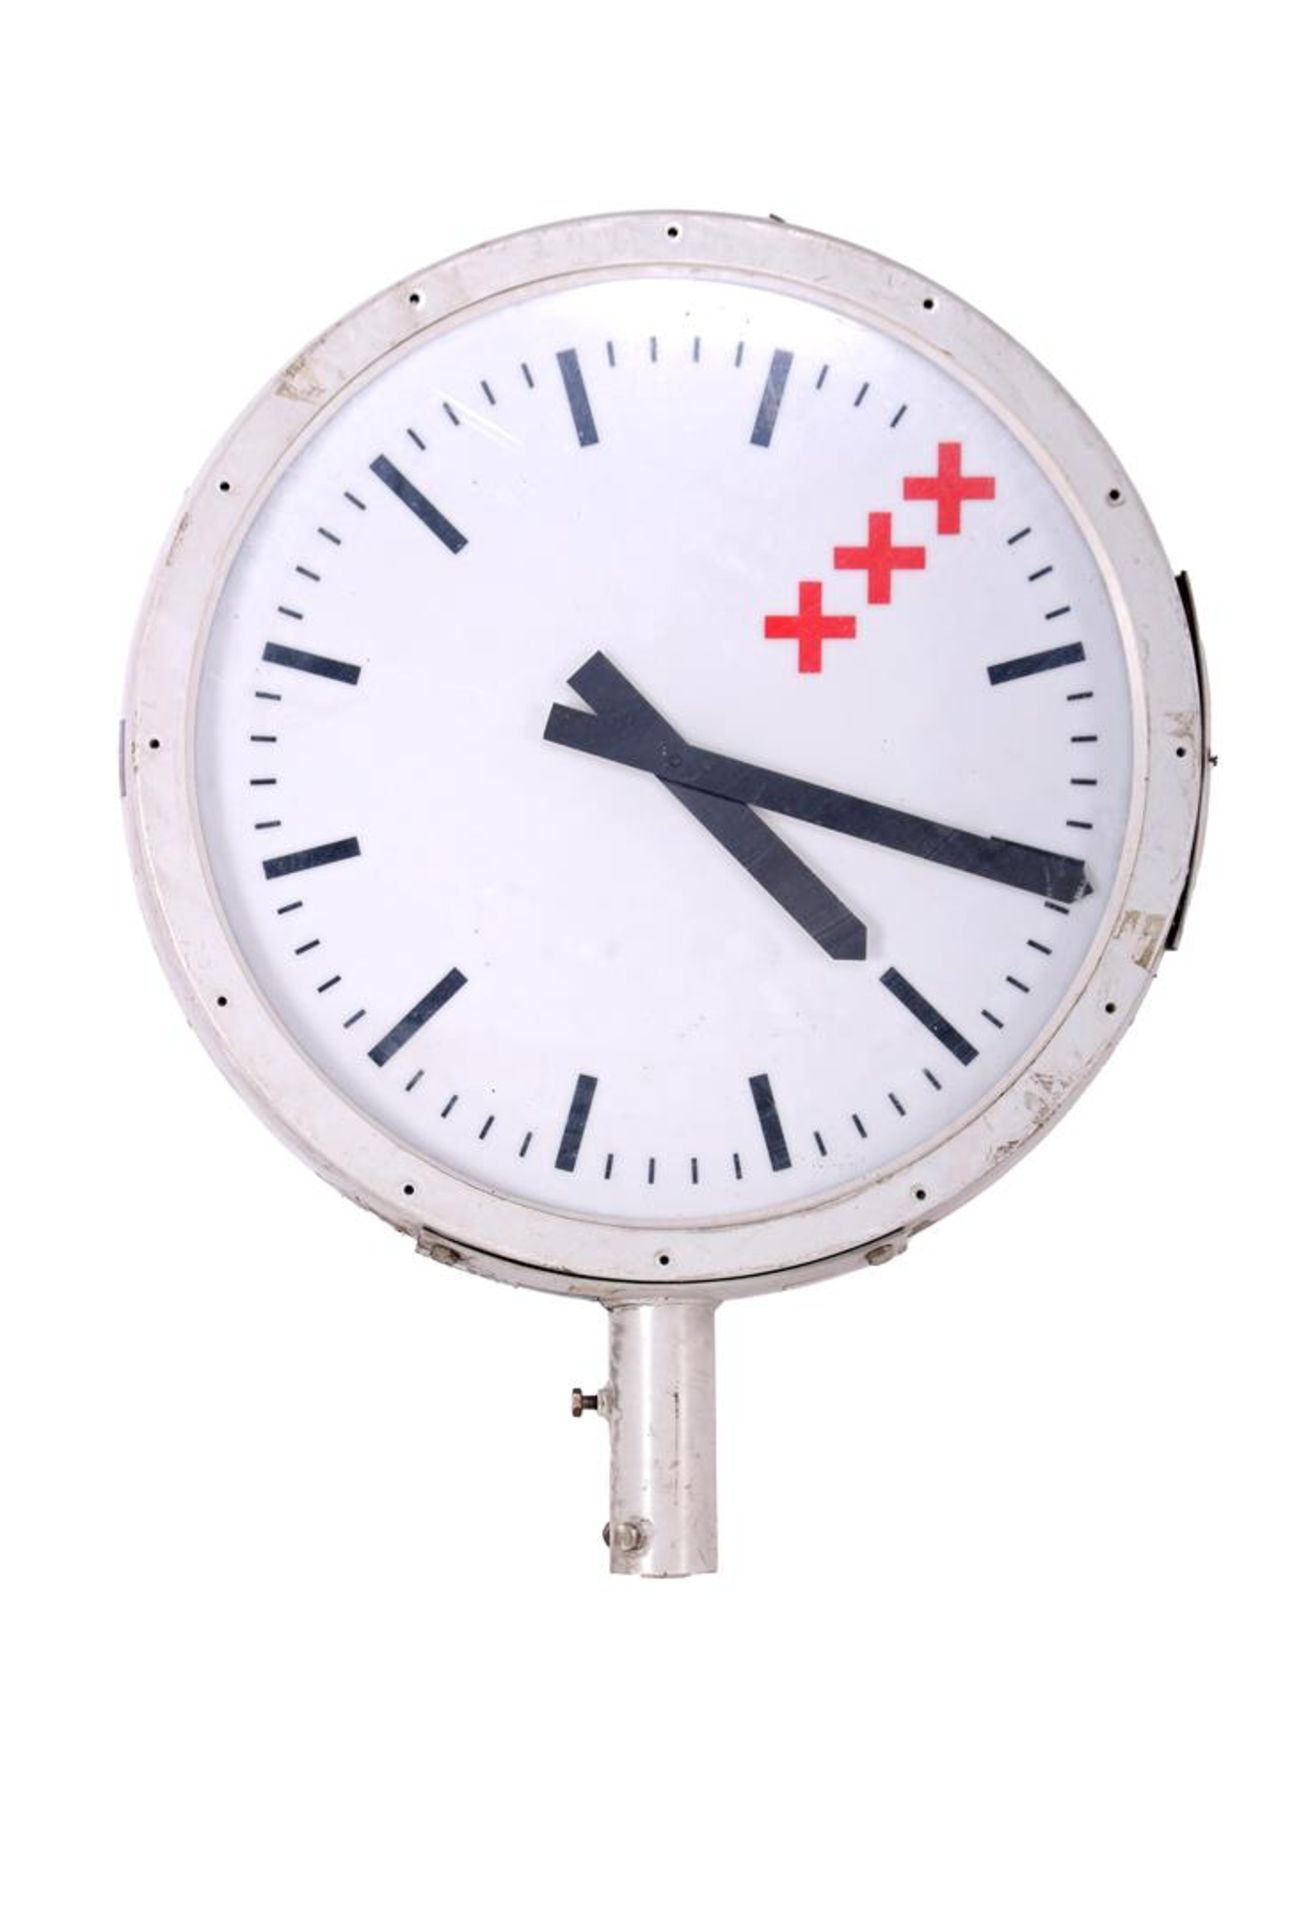 Metal mechanical industrial station clock - Image 2 of 3